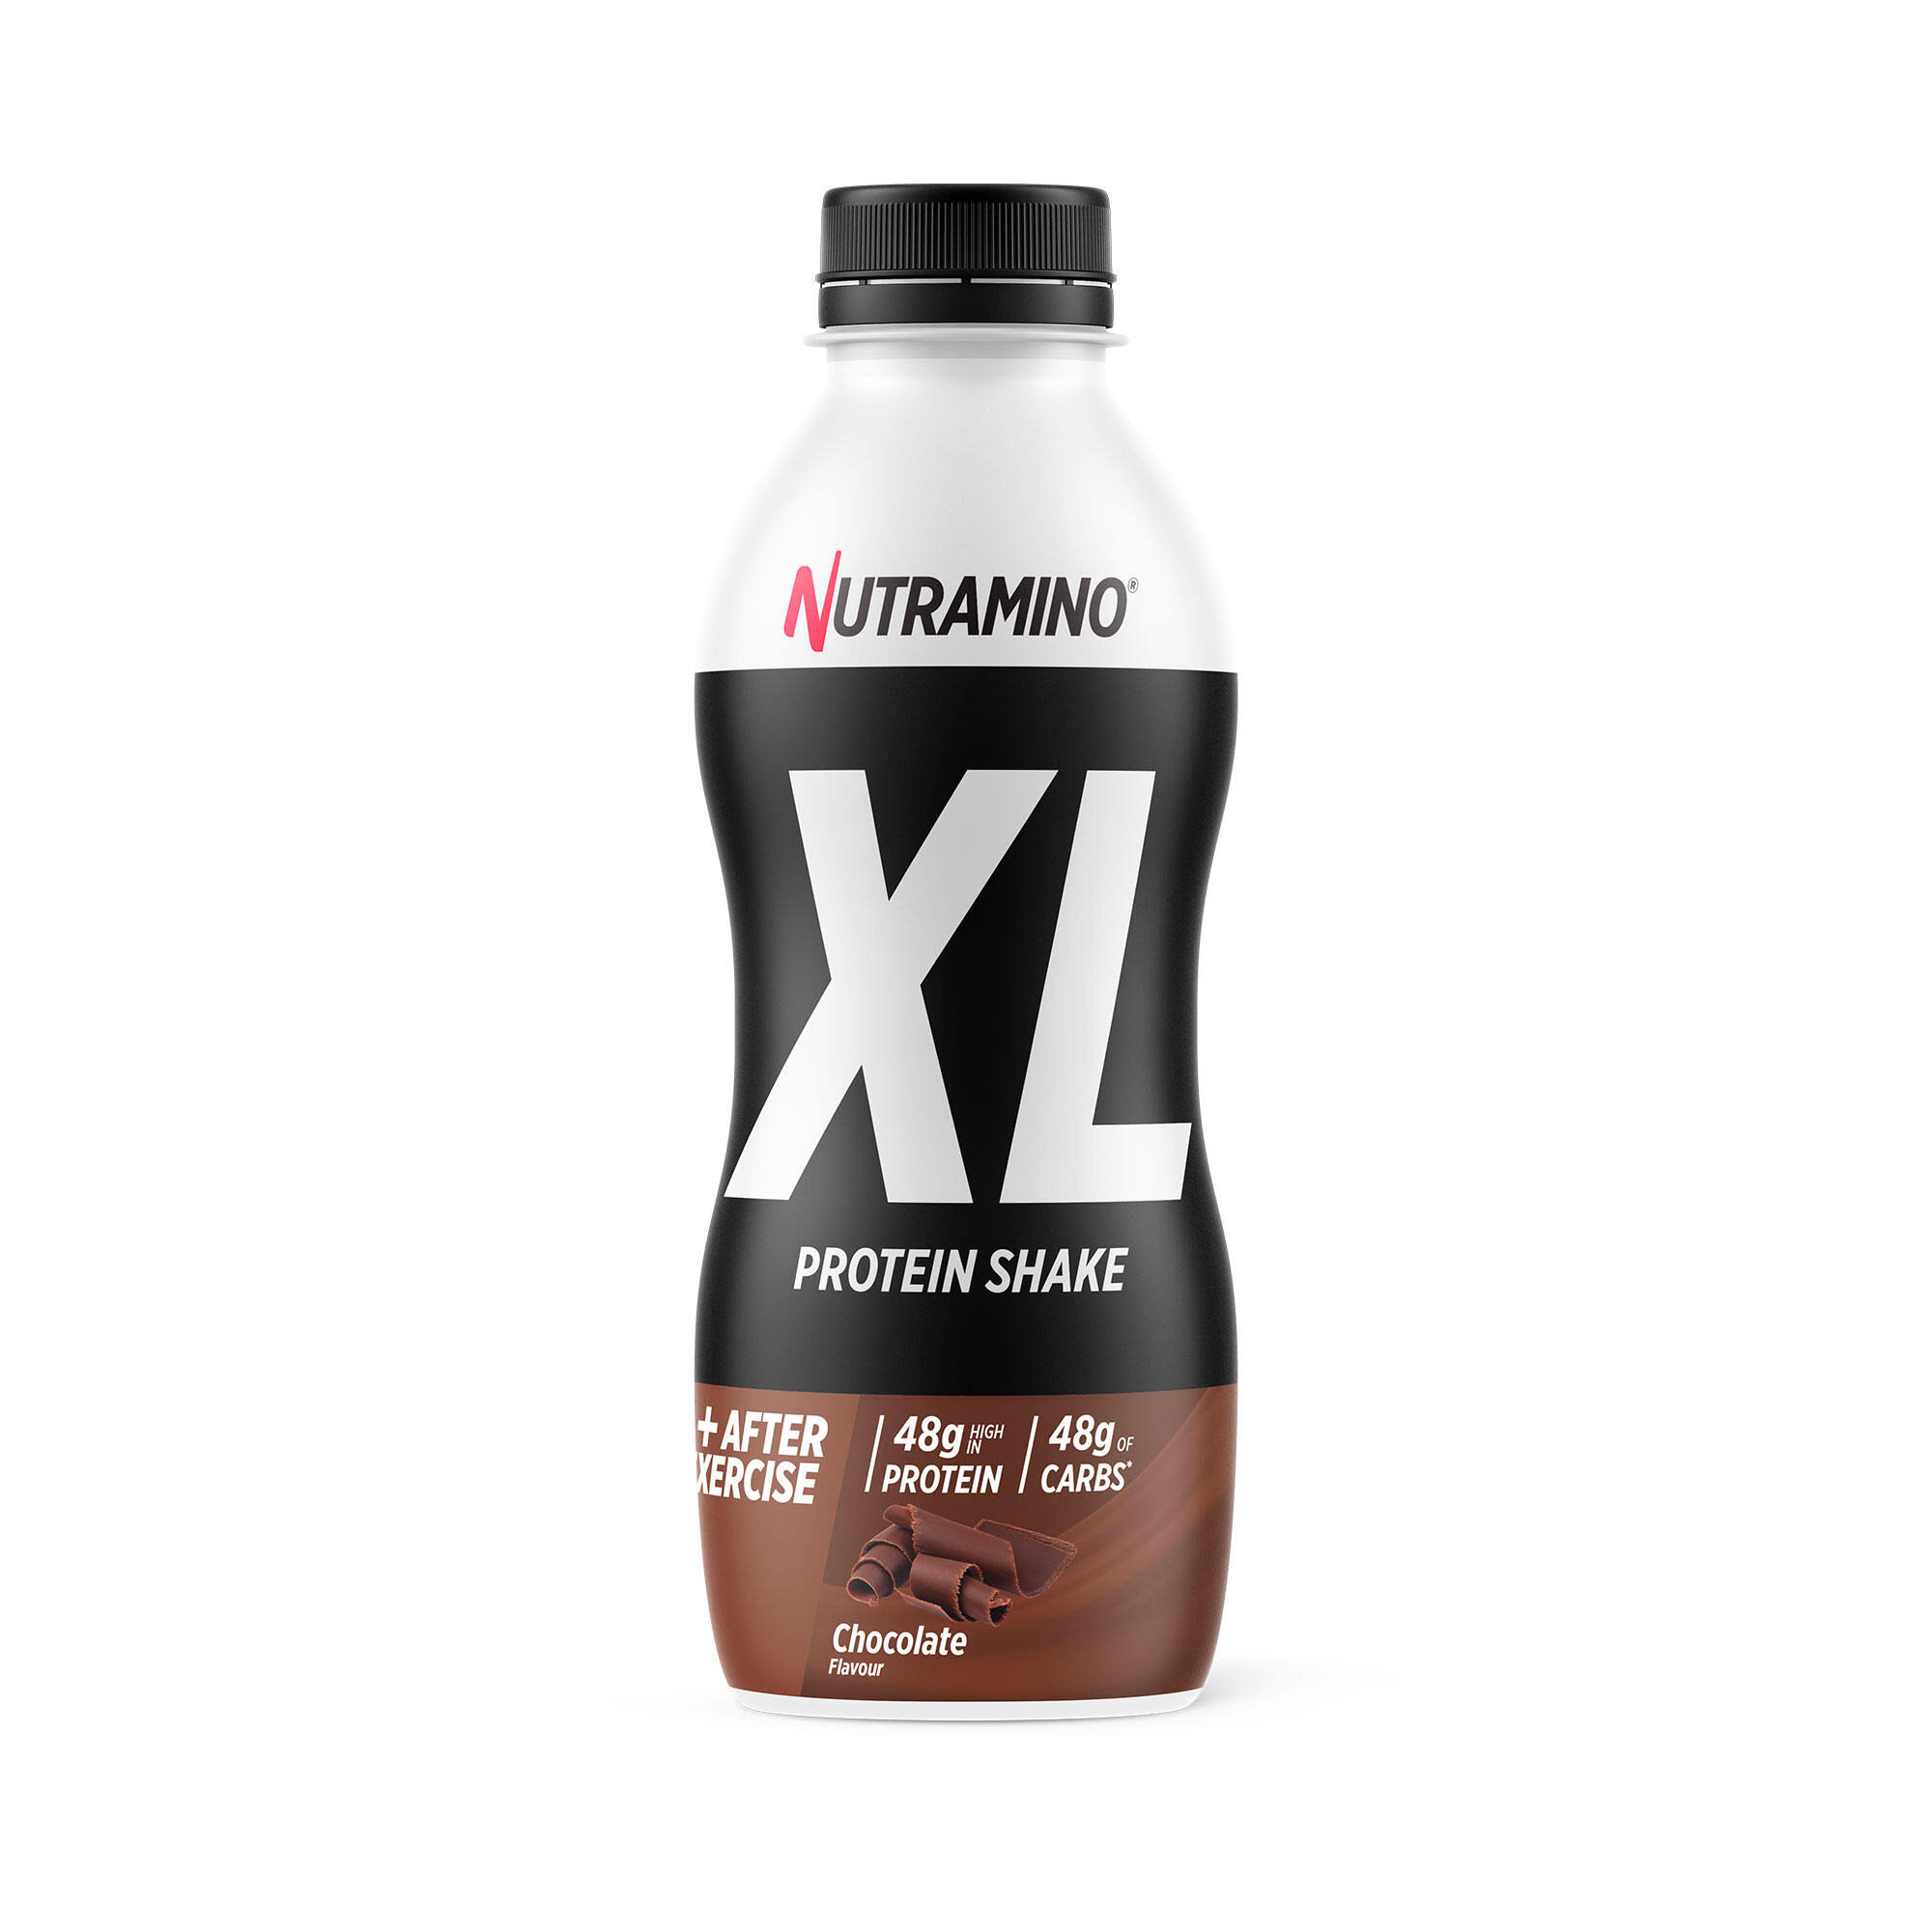 Nutramino Protein XL (1 Bottle) Chocolate